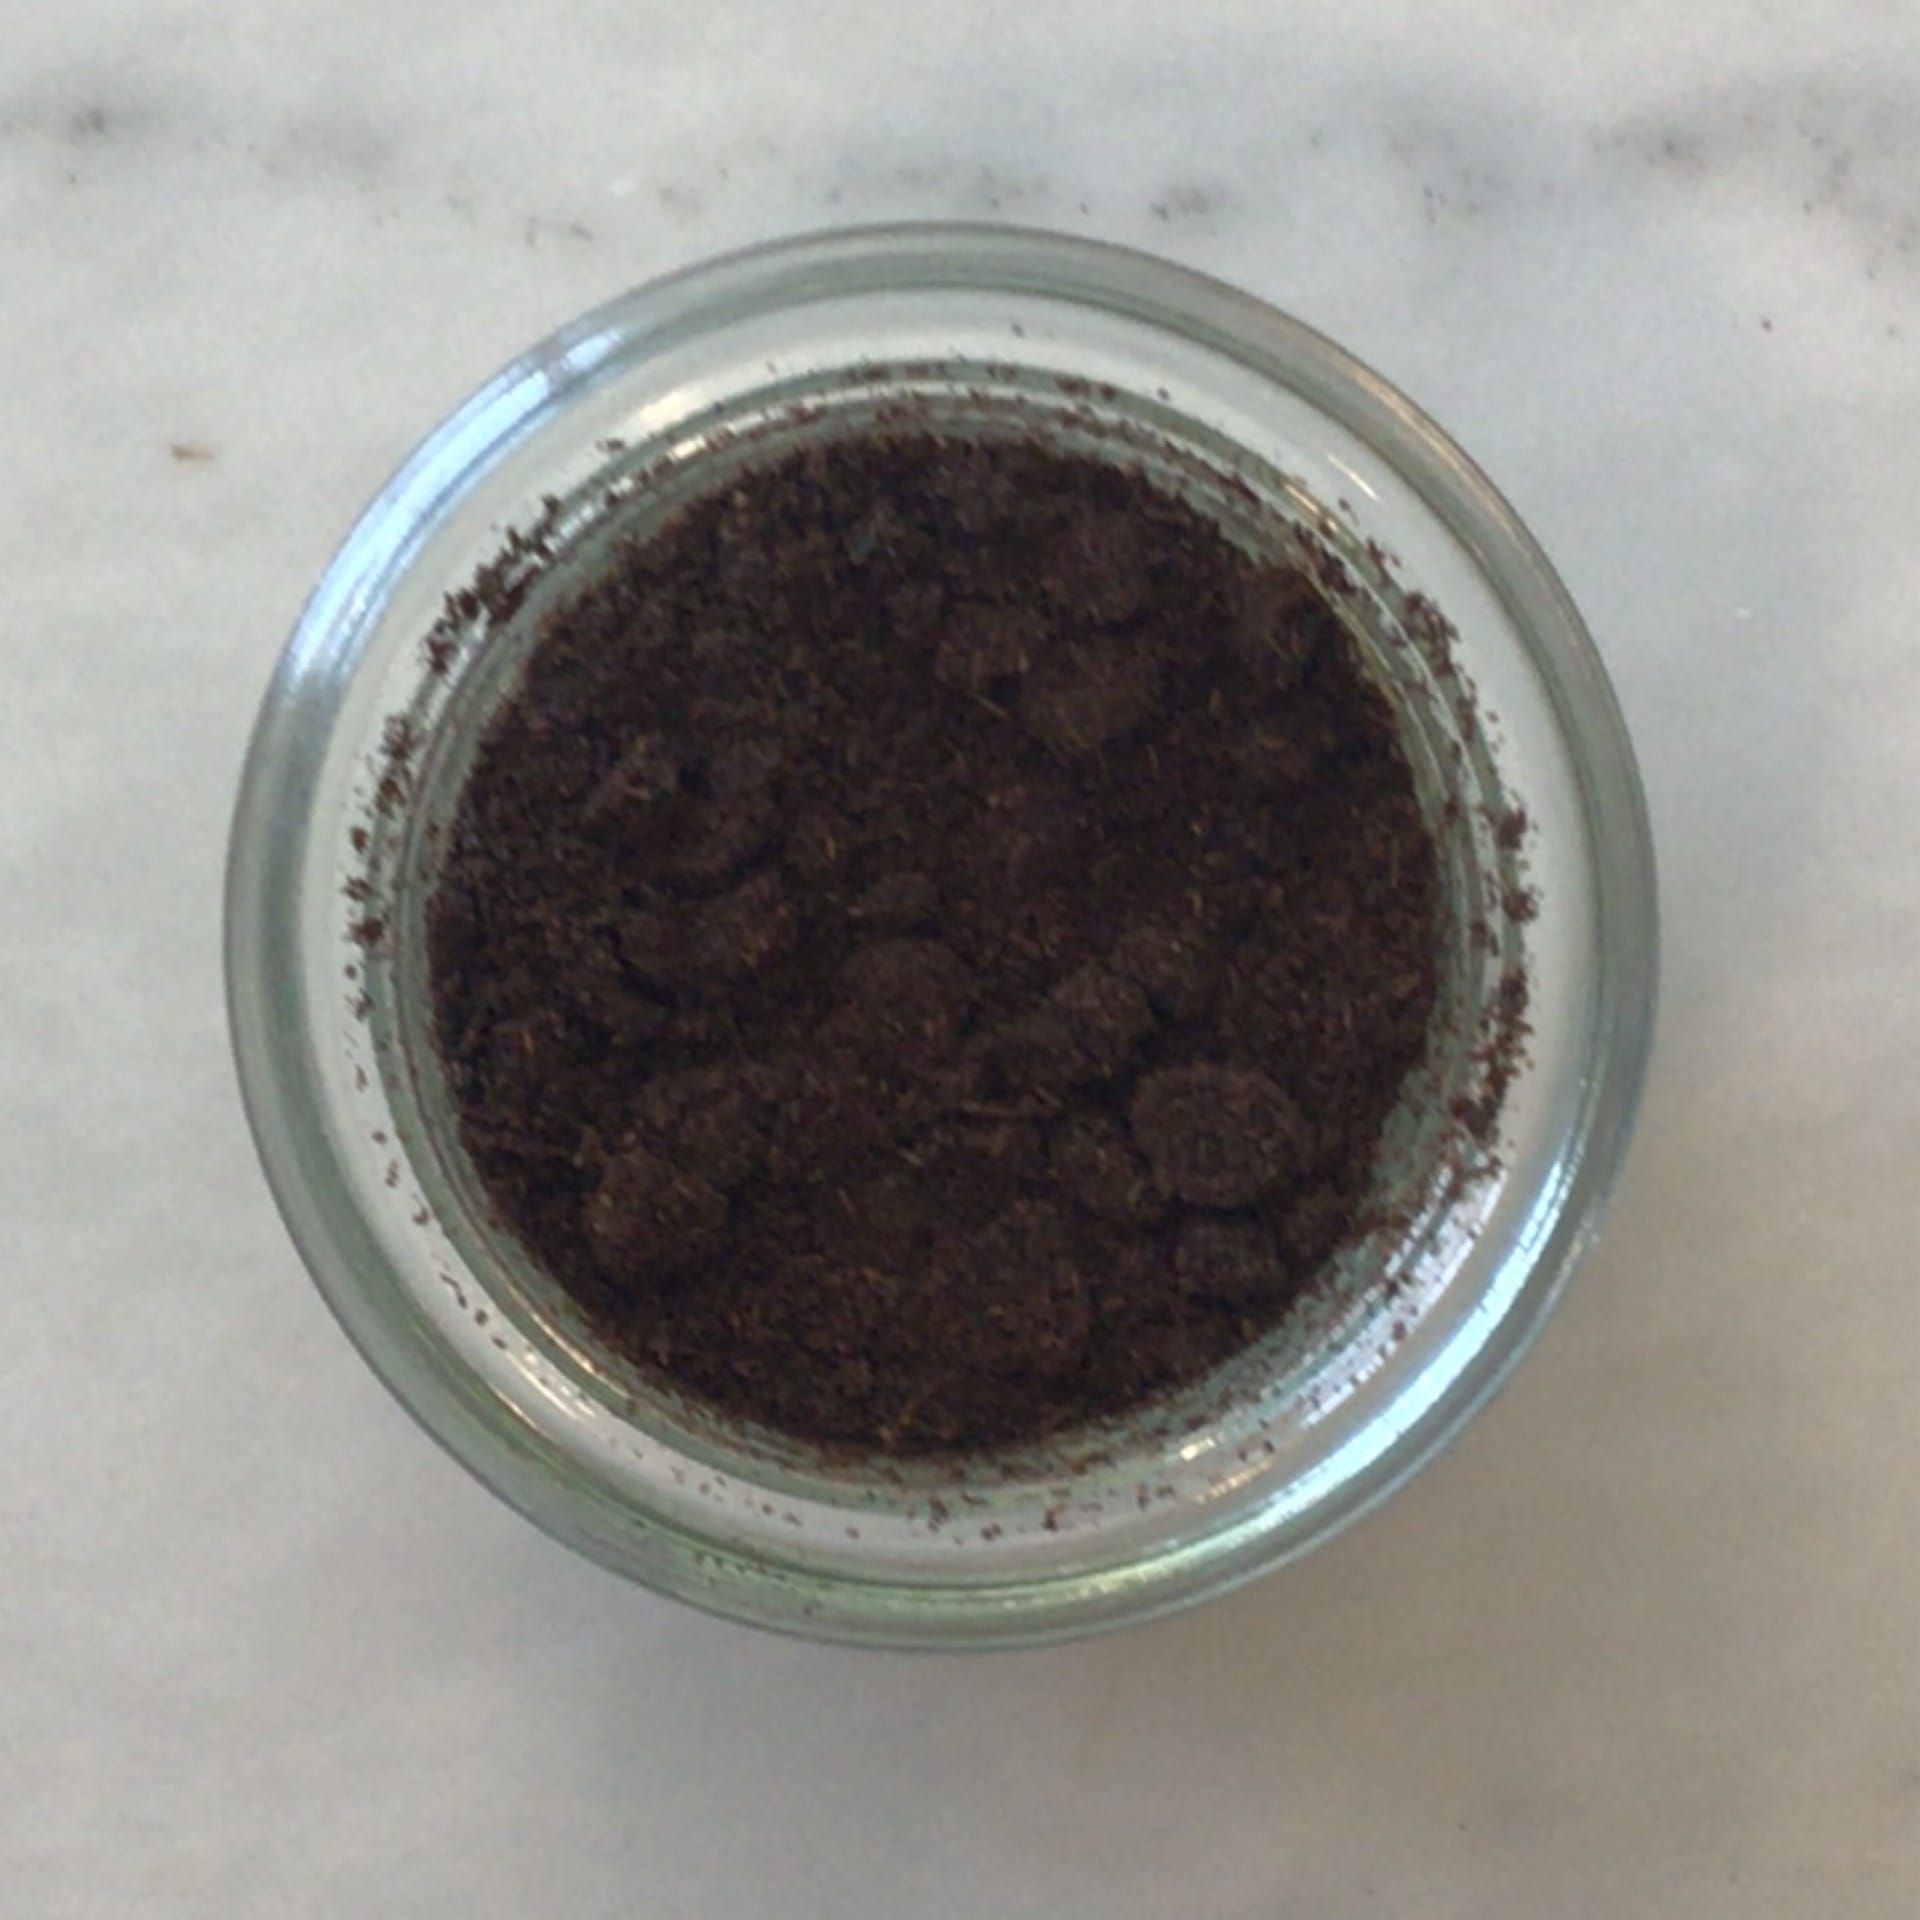 Whole vanilla beans ground into a fine powder